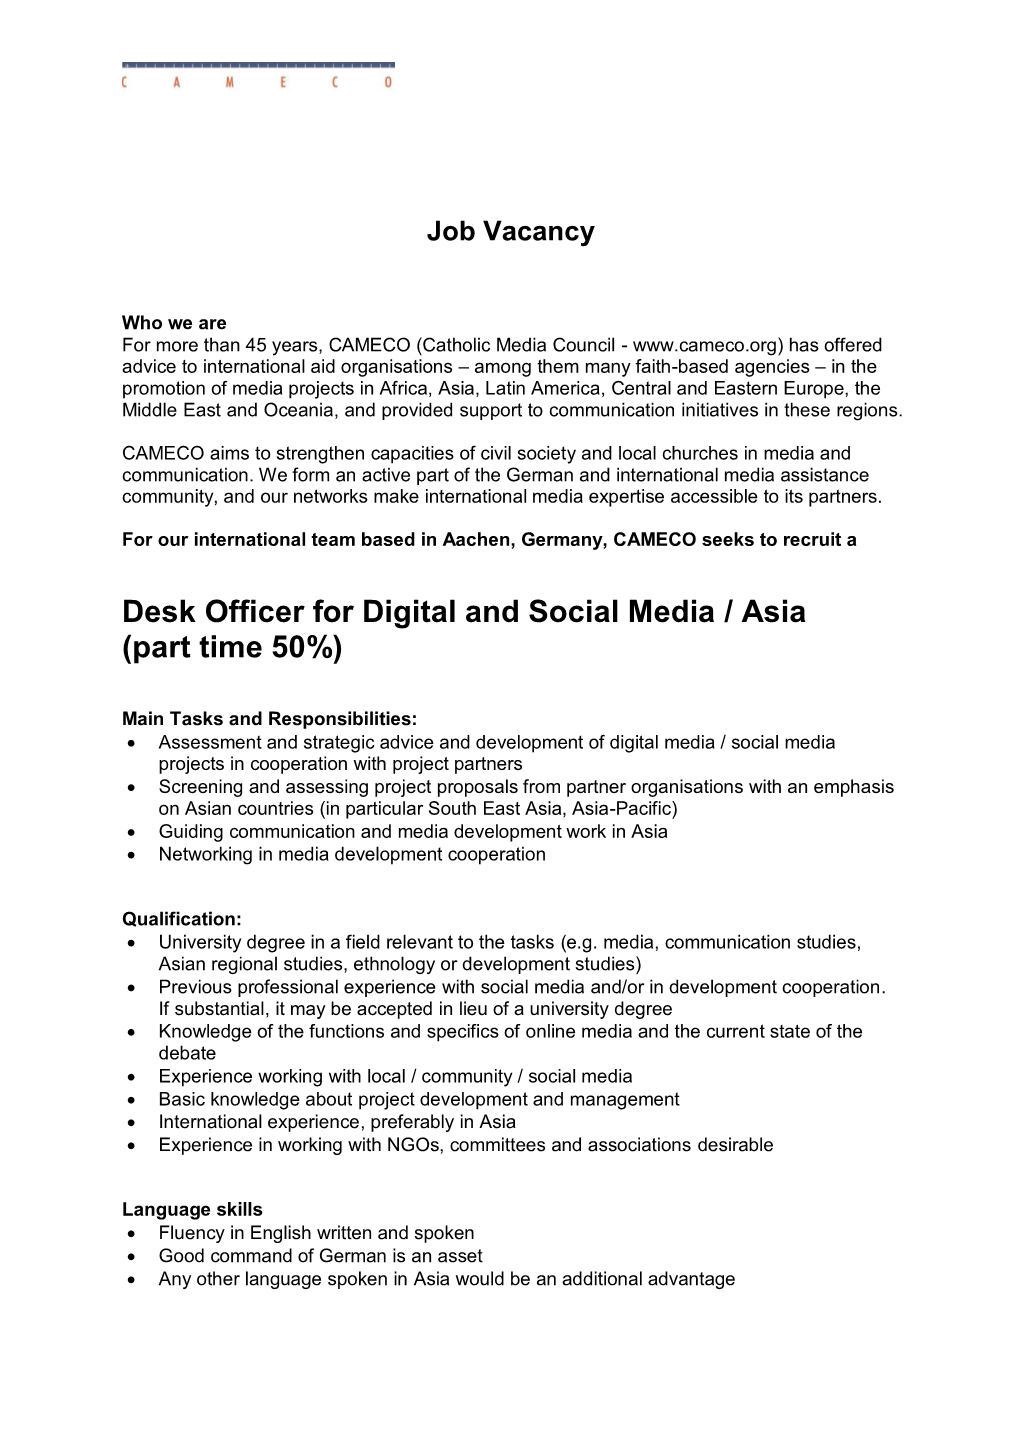 Desk Officer for Digital and Social Media / Asia (Part Time 50%)